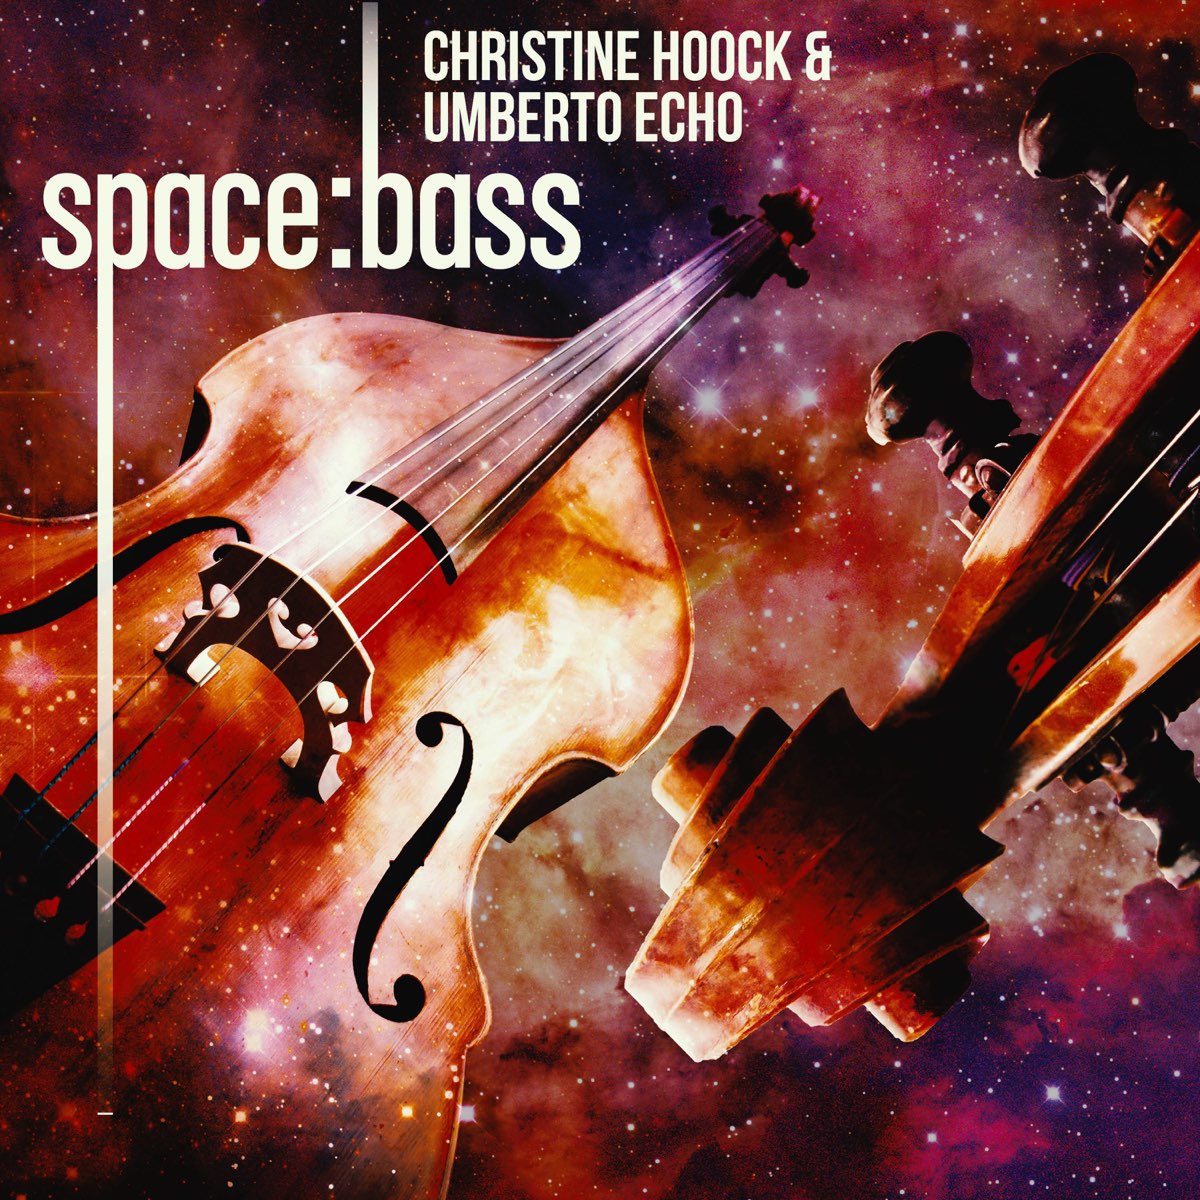 Cosmic bass. Chris Echoes. Hoock.